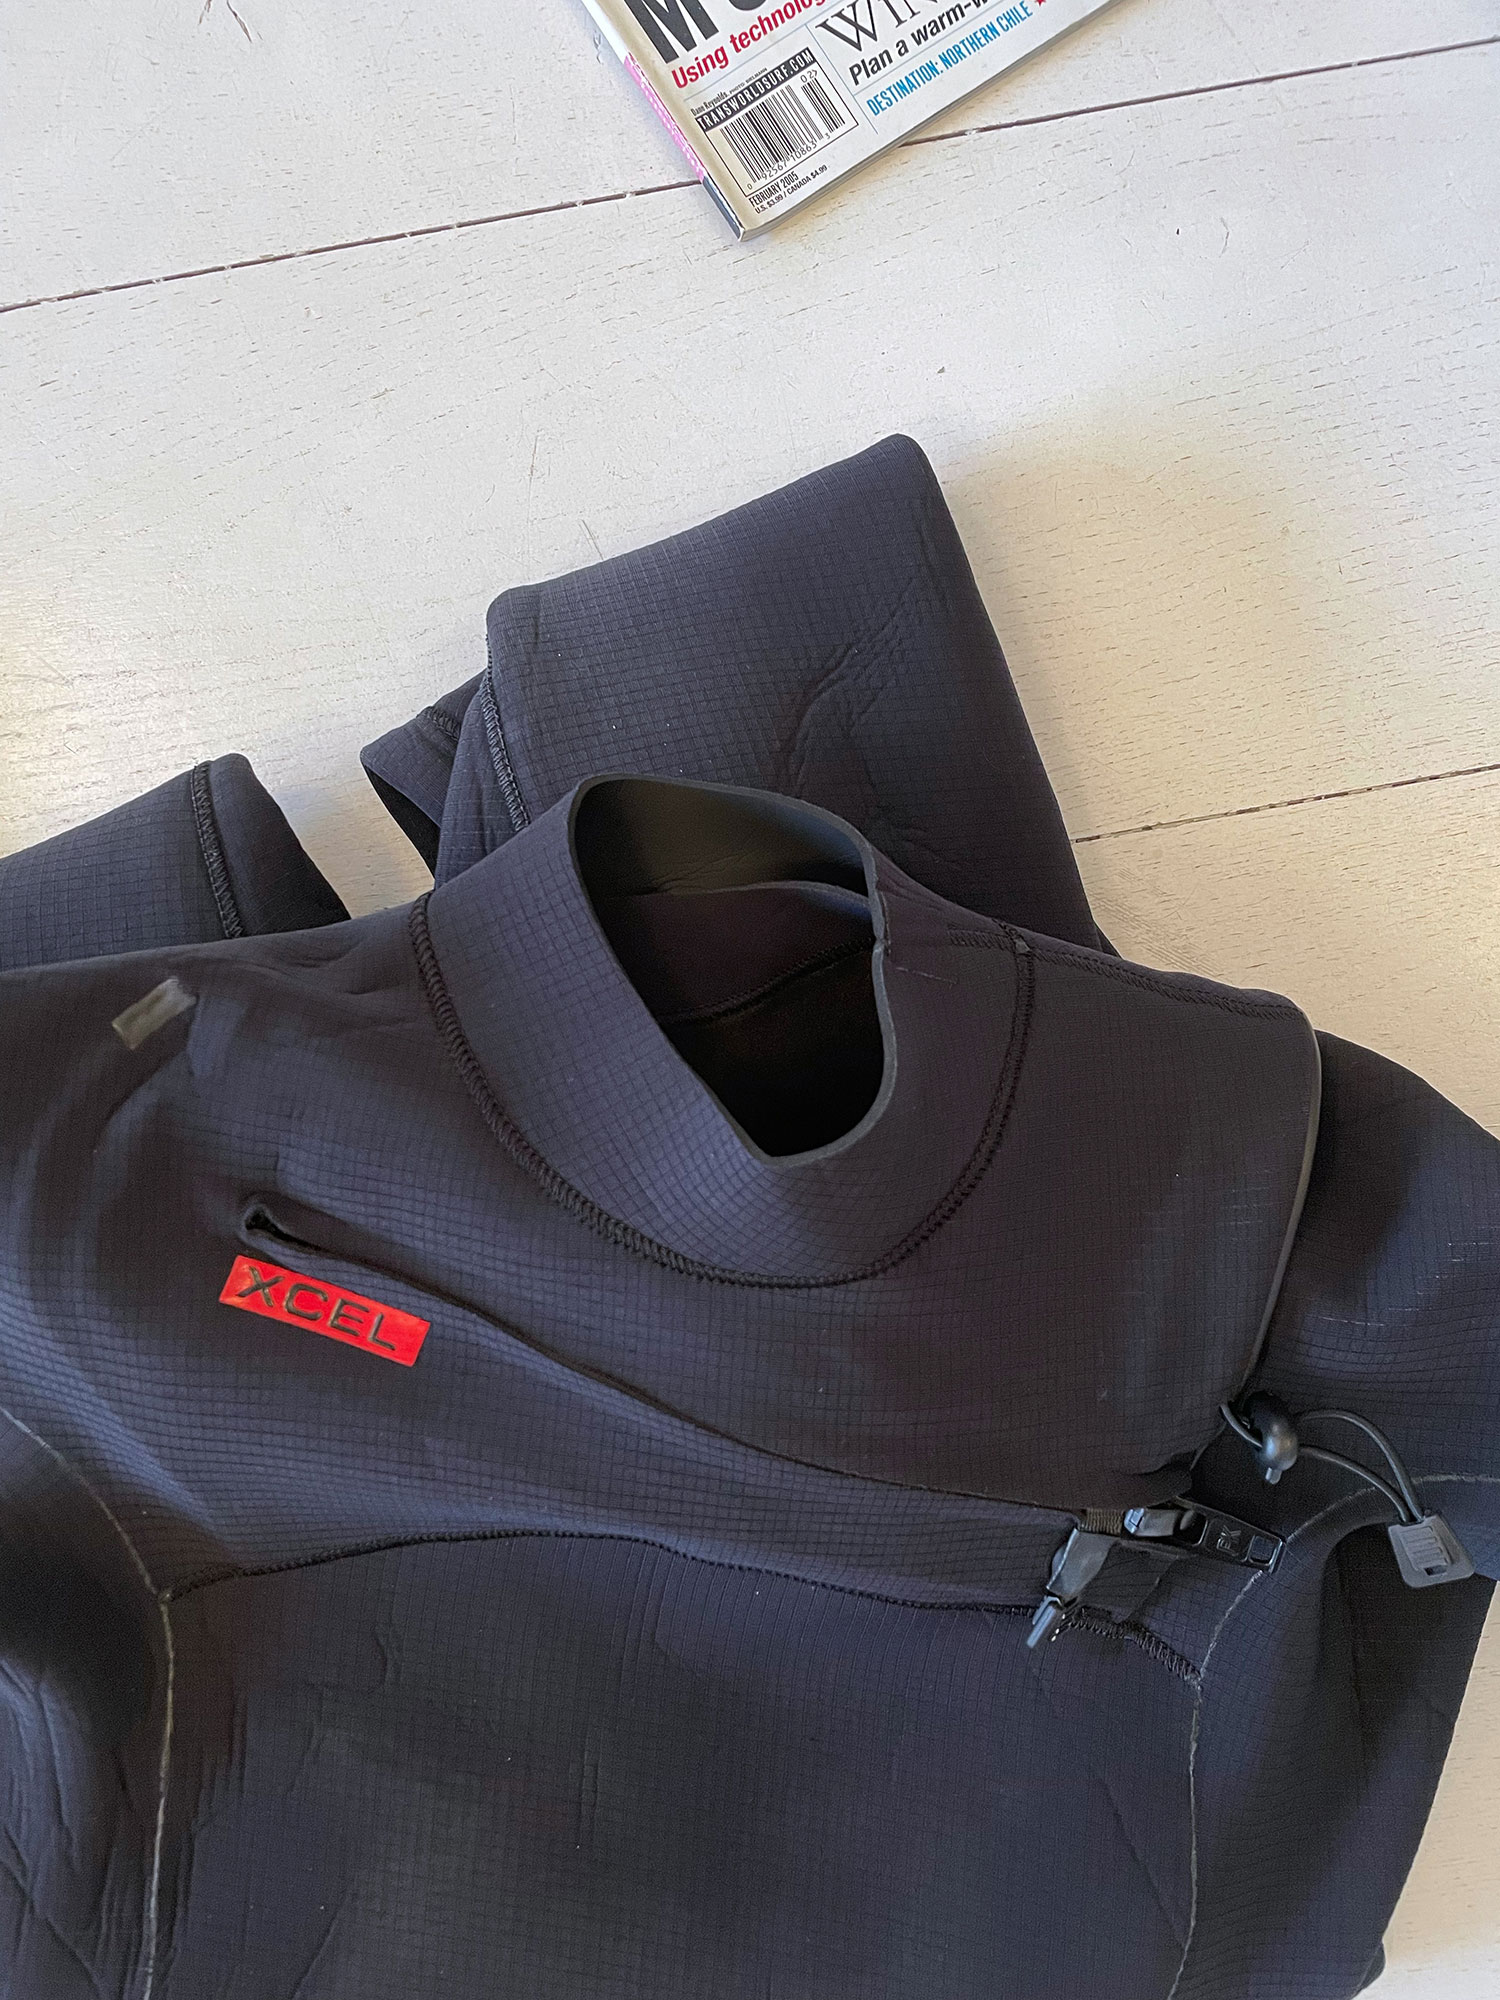 xcel radiant rebound wetsuit review